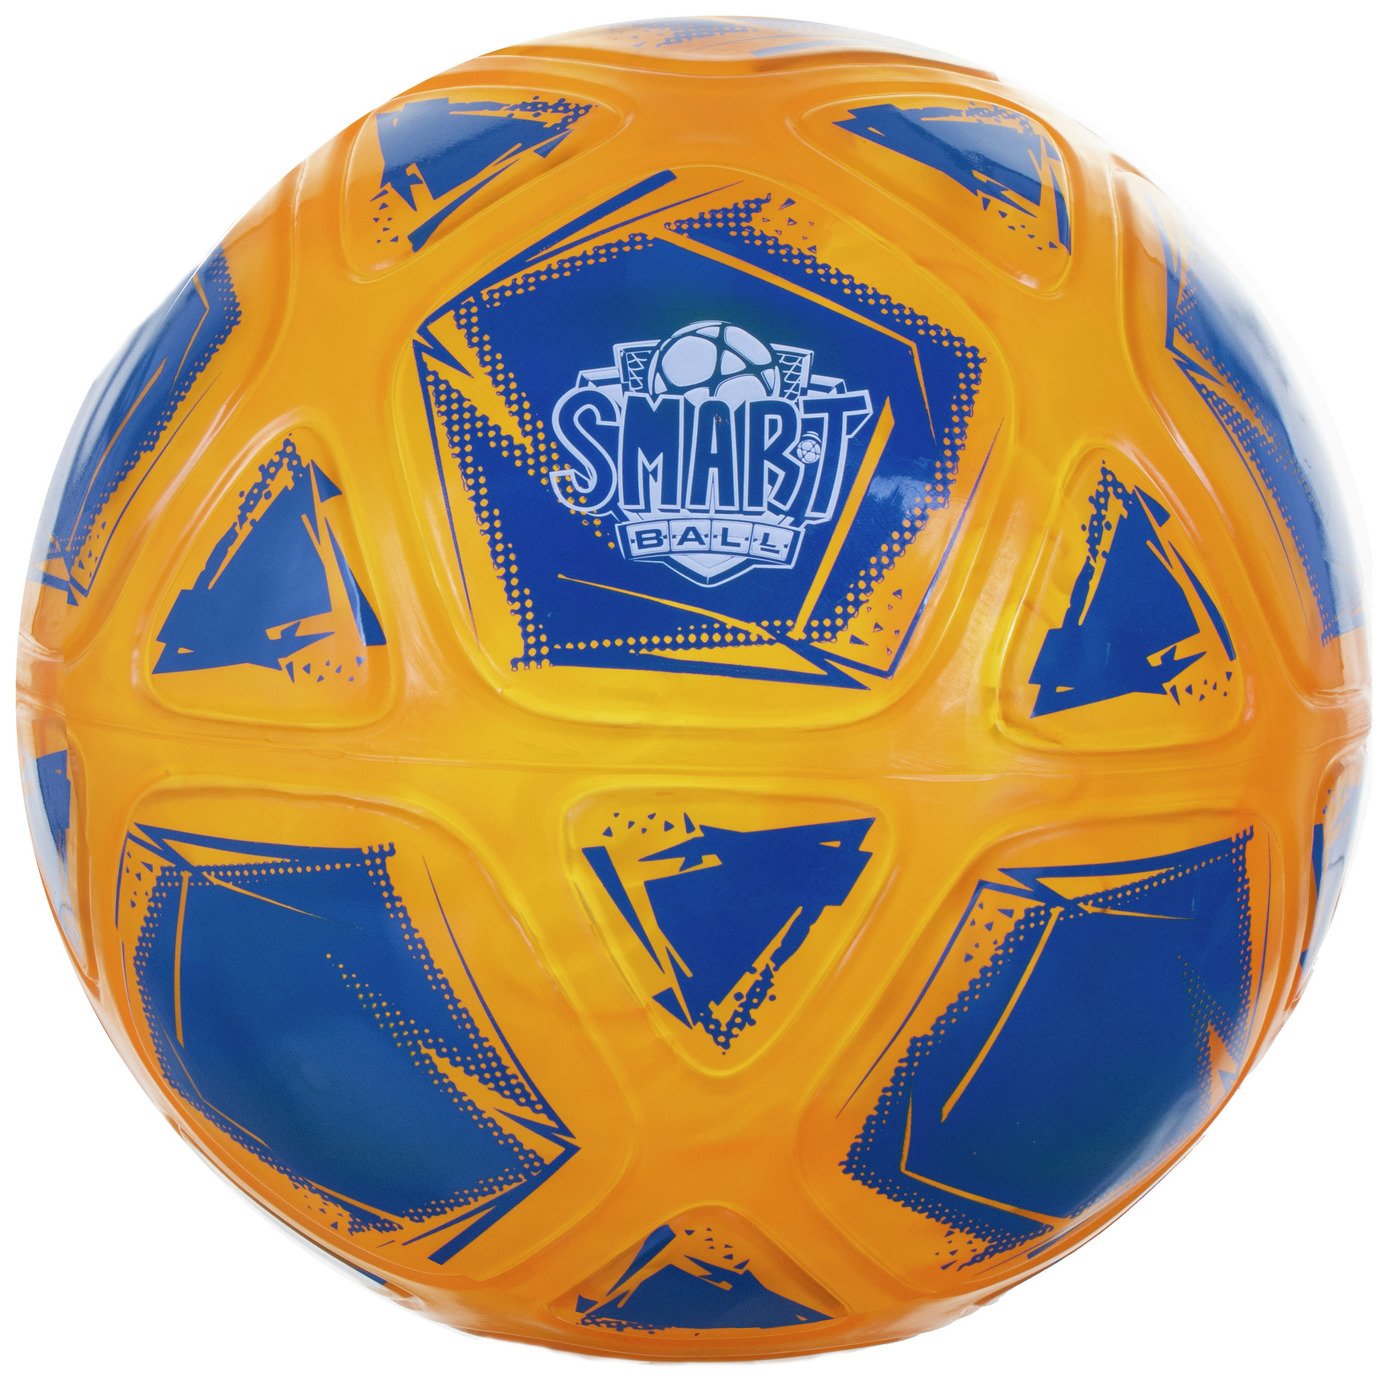 Smart Ball Skills Training Size 5 Football -Blue and Orange